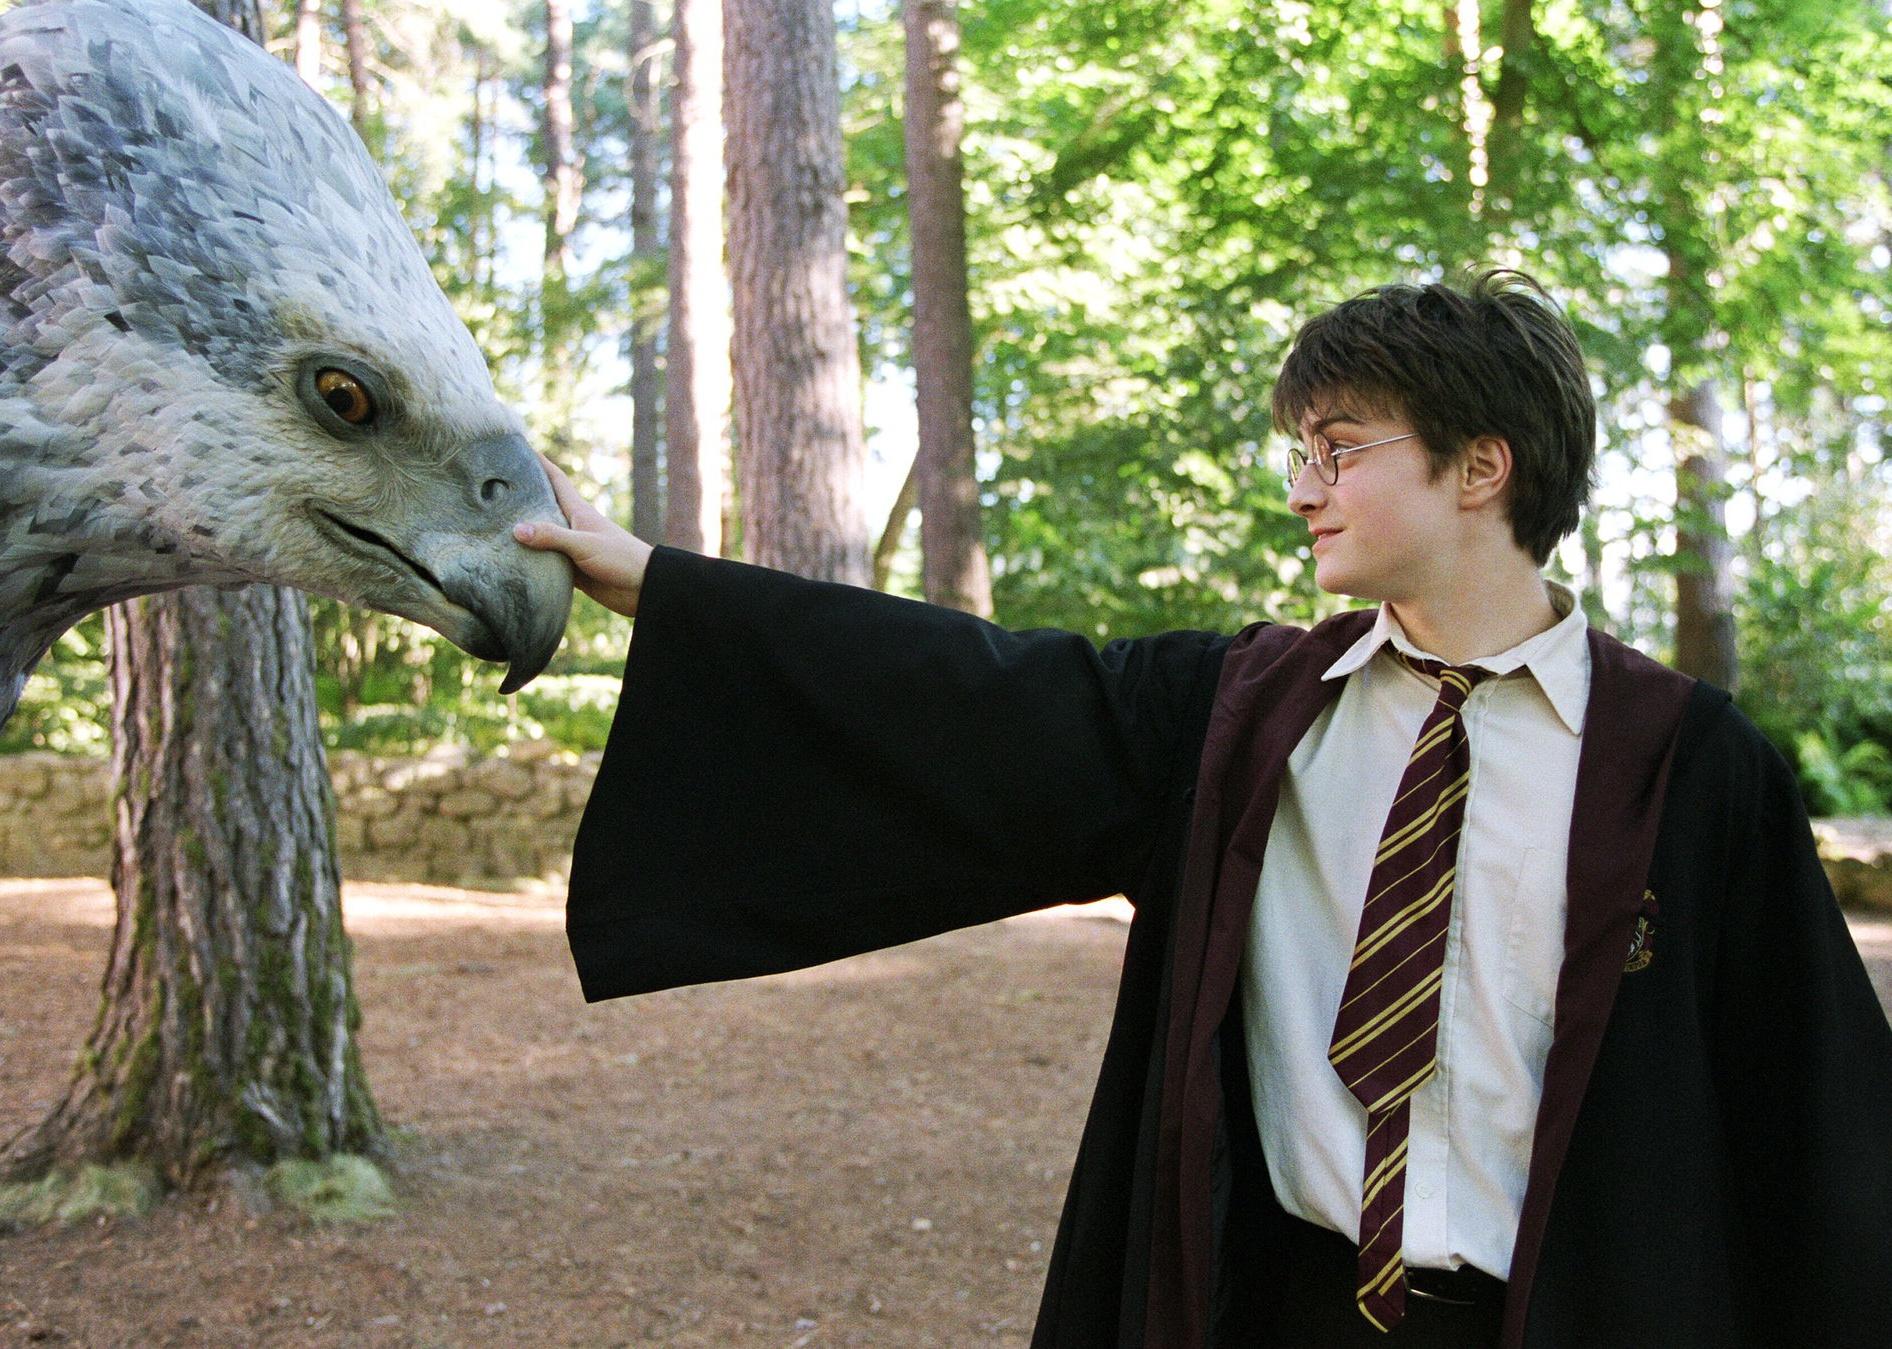 Daniel Radcliffe holding onto a giant bird's beak.